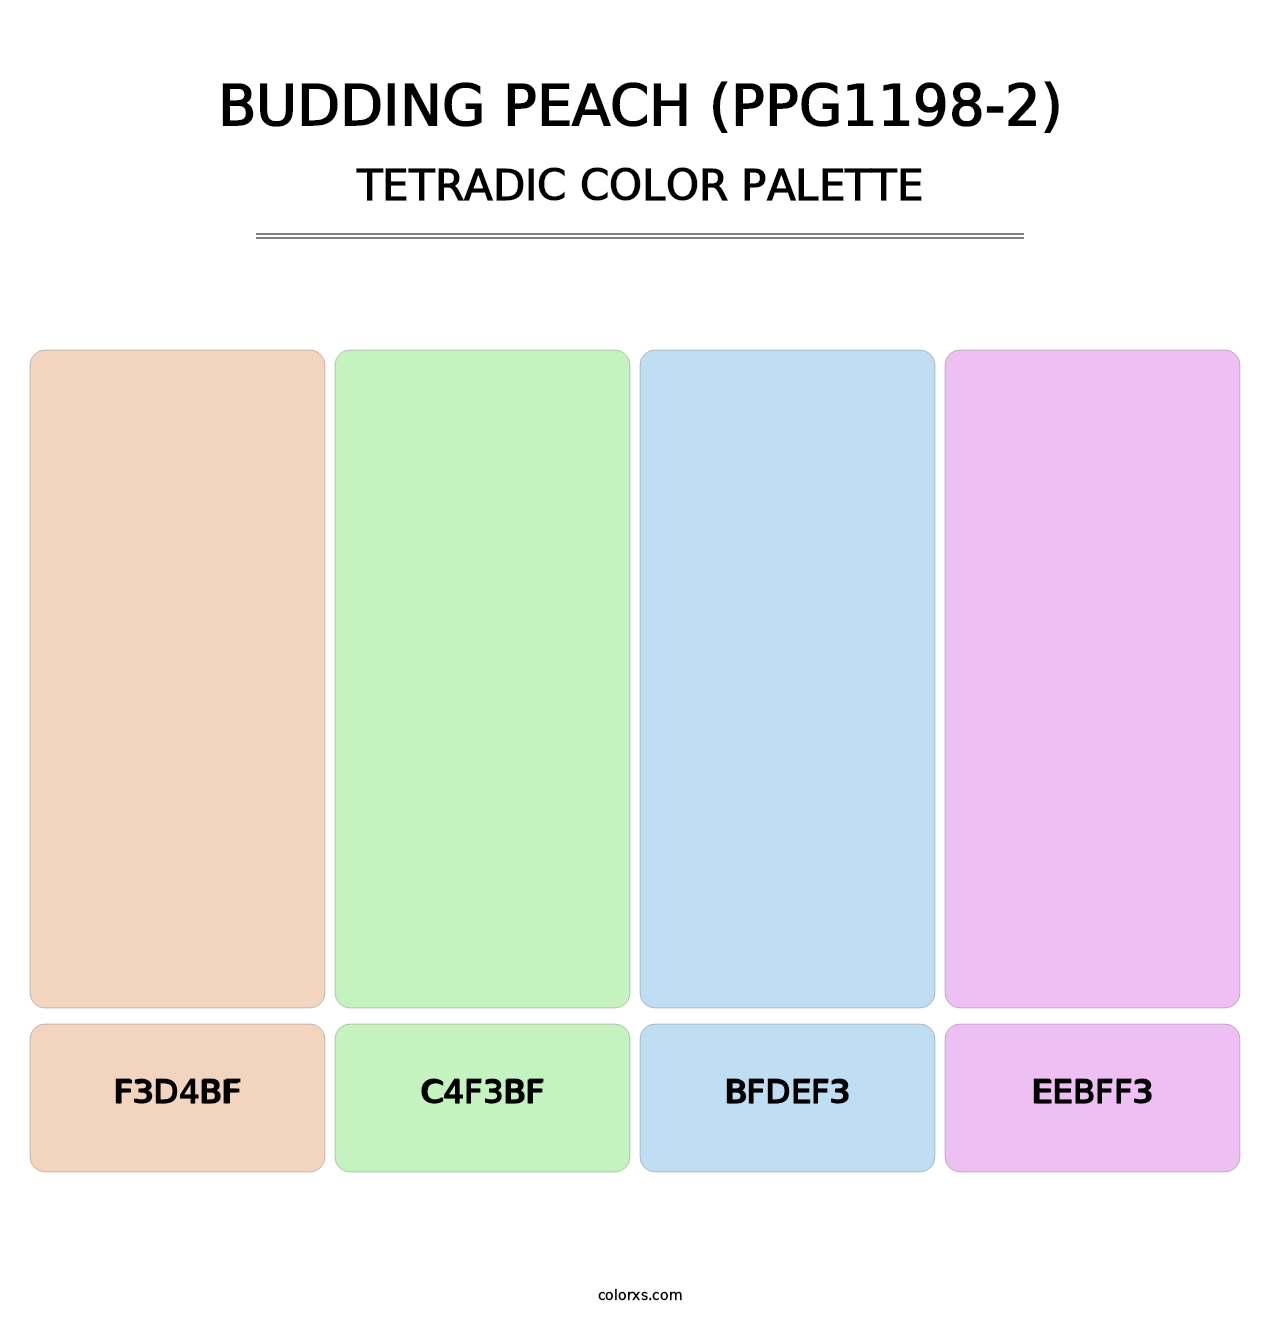 Budding Peach (PPG1198-2) - Tetradic Color Palette